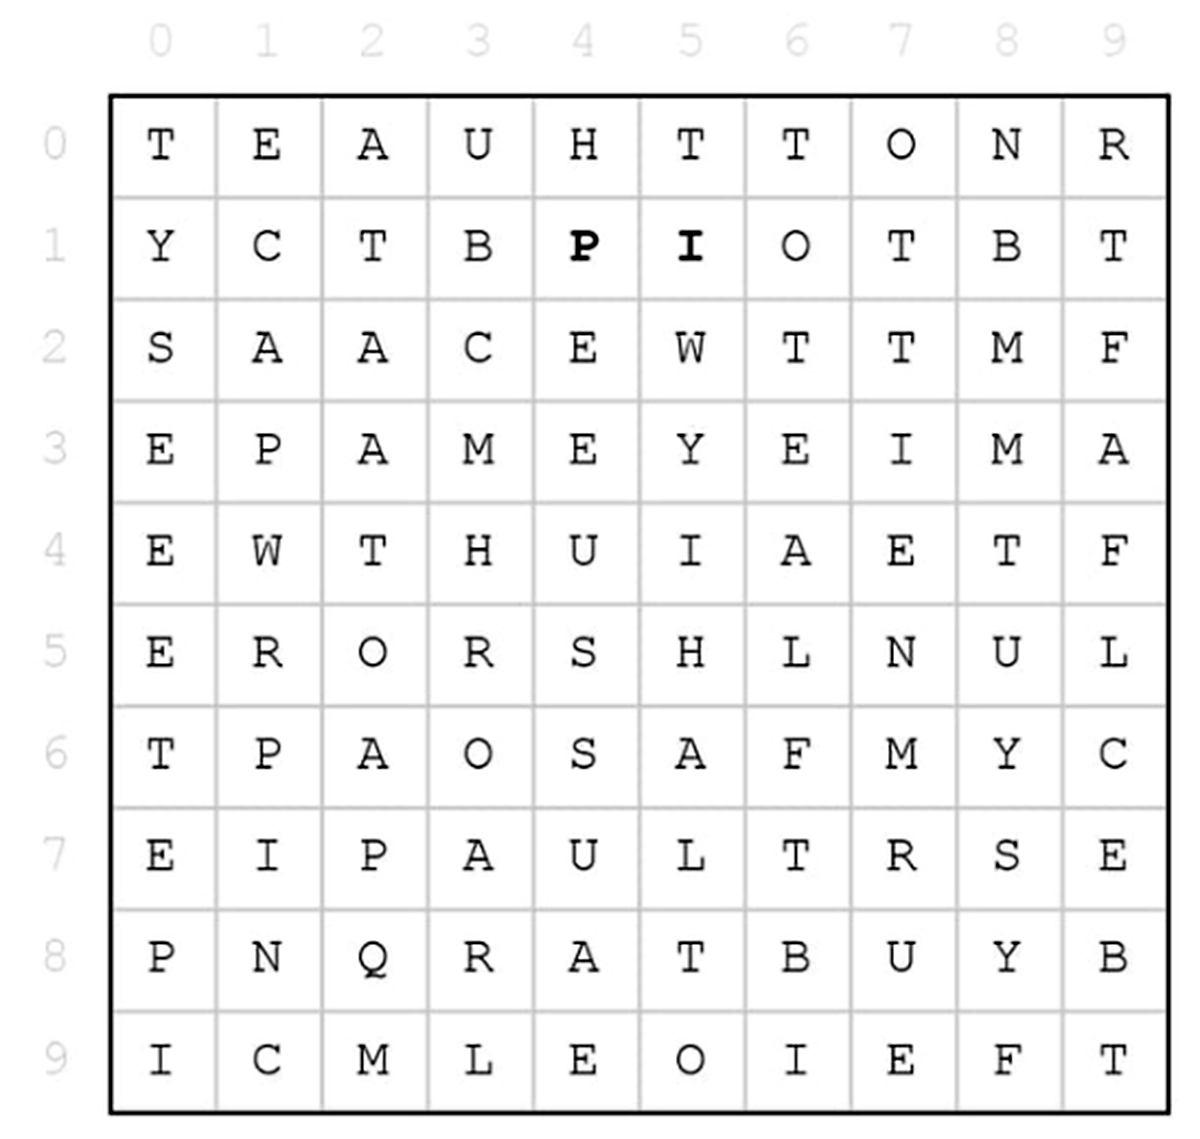 Q42 Puzzle Challenge 🧩